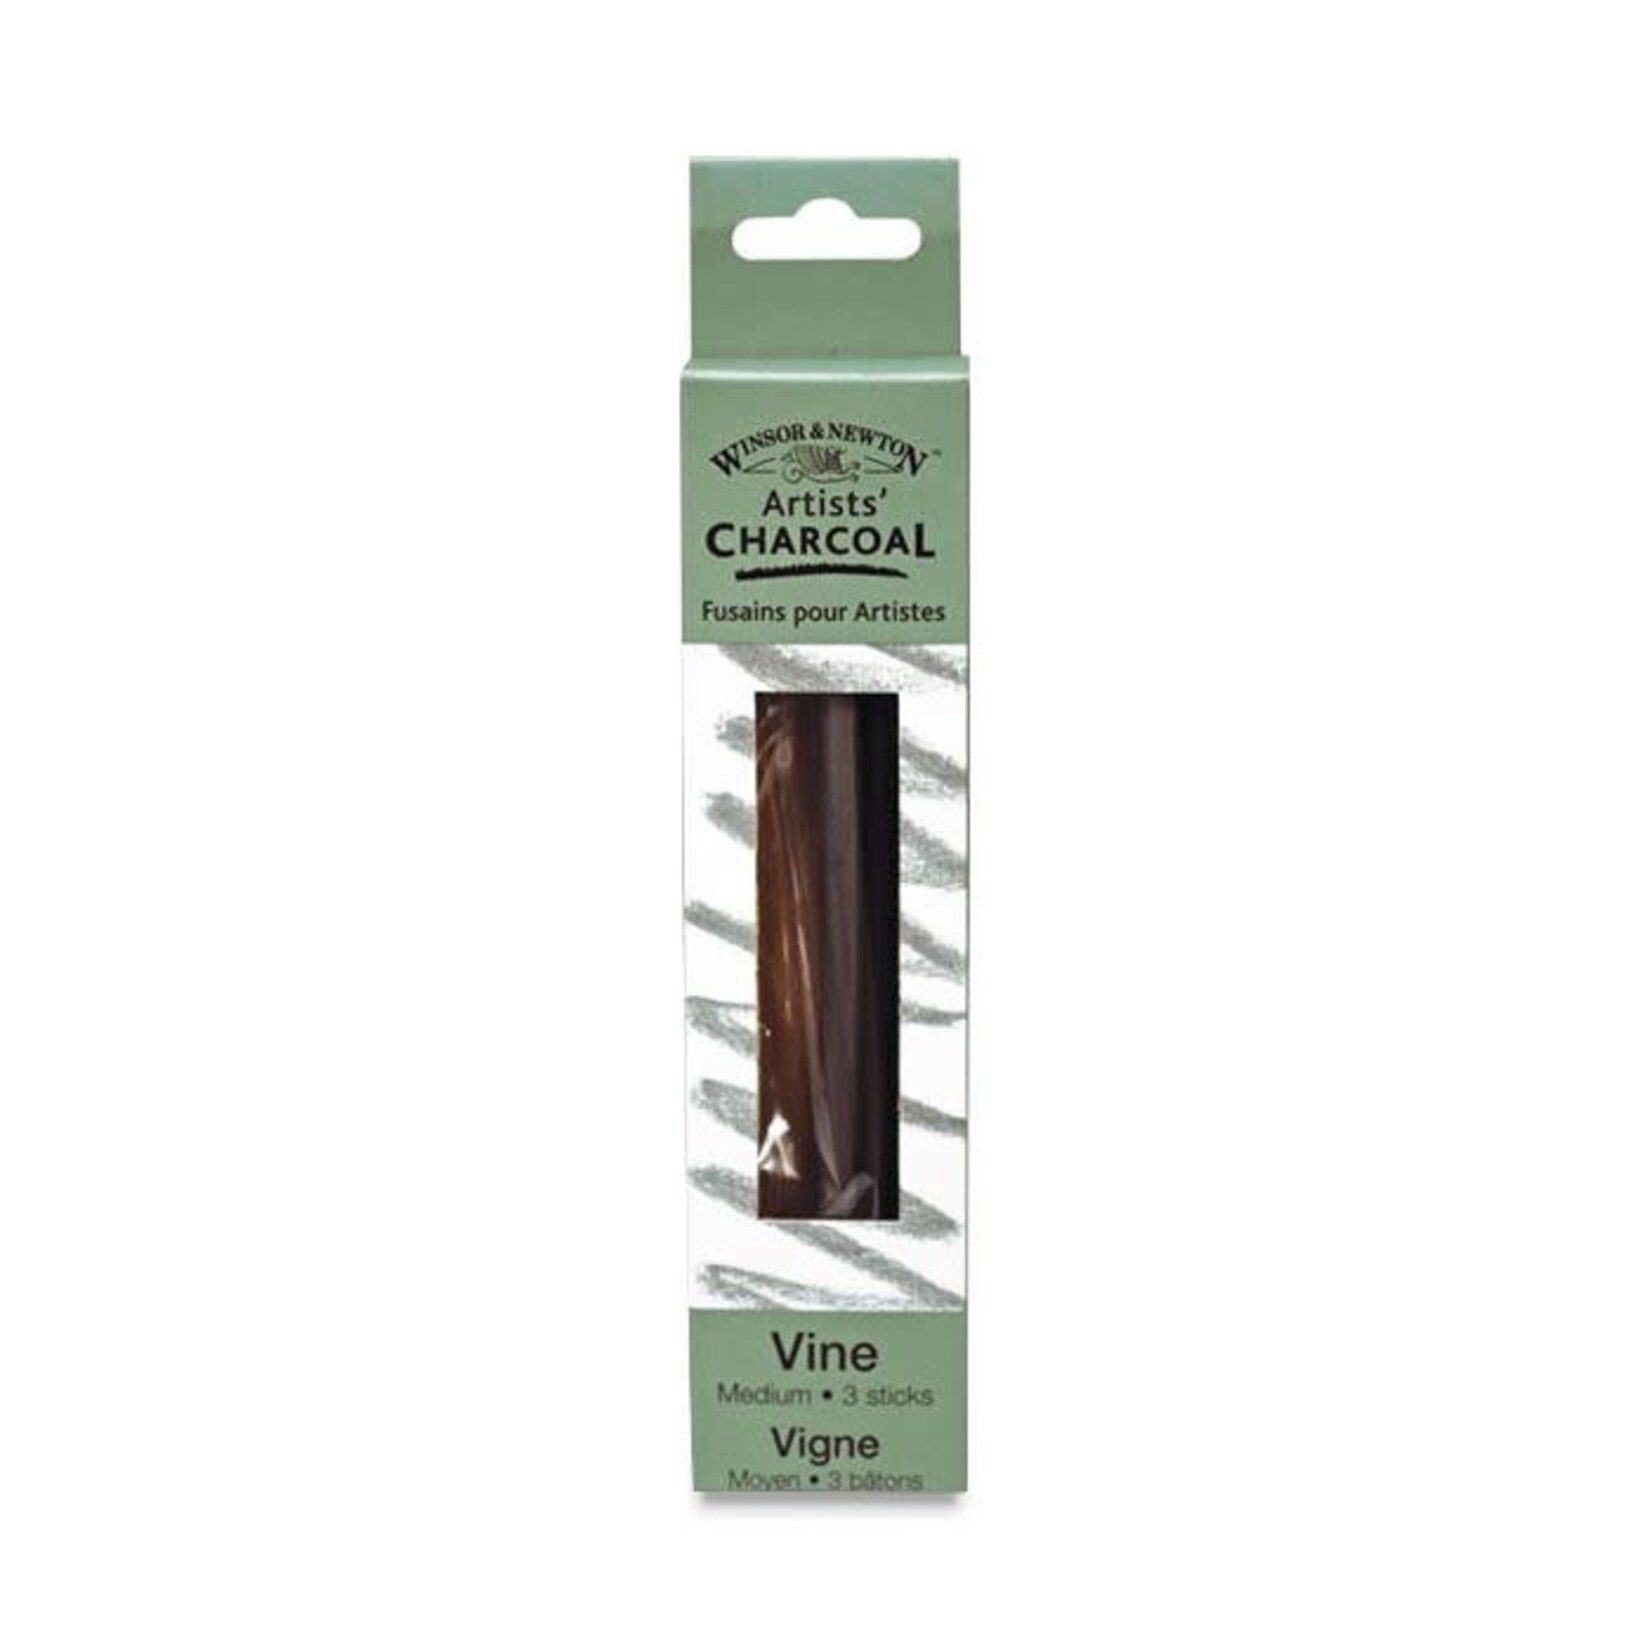 Winsor & Newton Artists' Vine Charcoal Medium - Box Of 12 Sticks